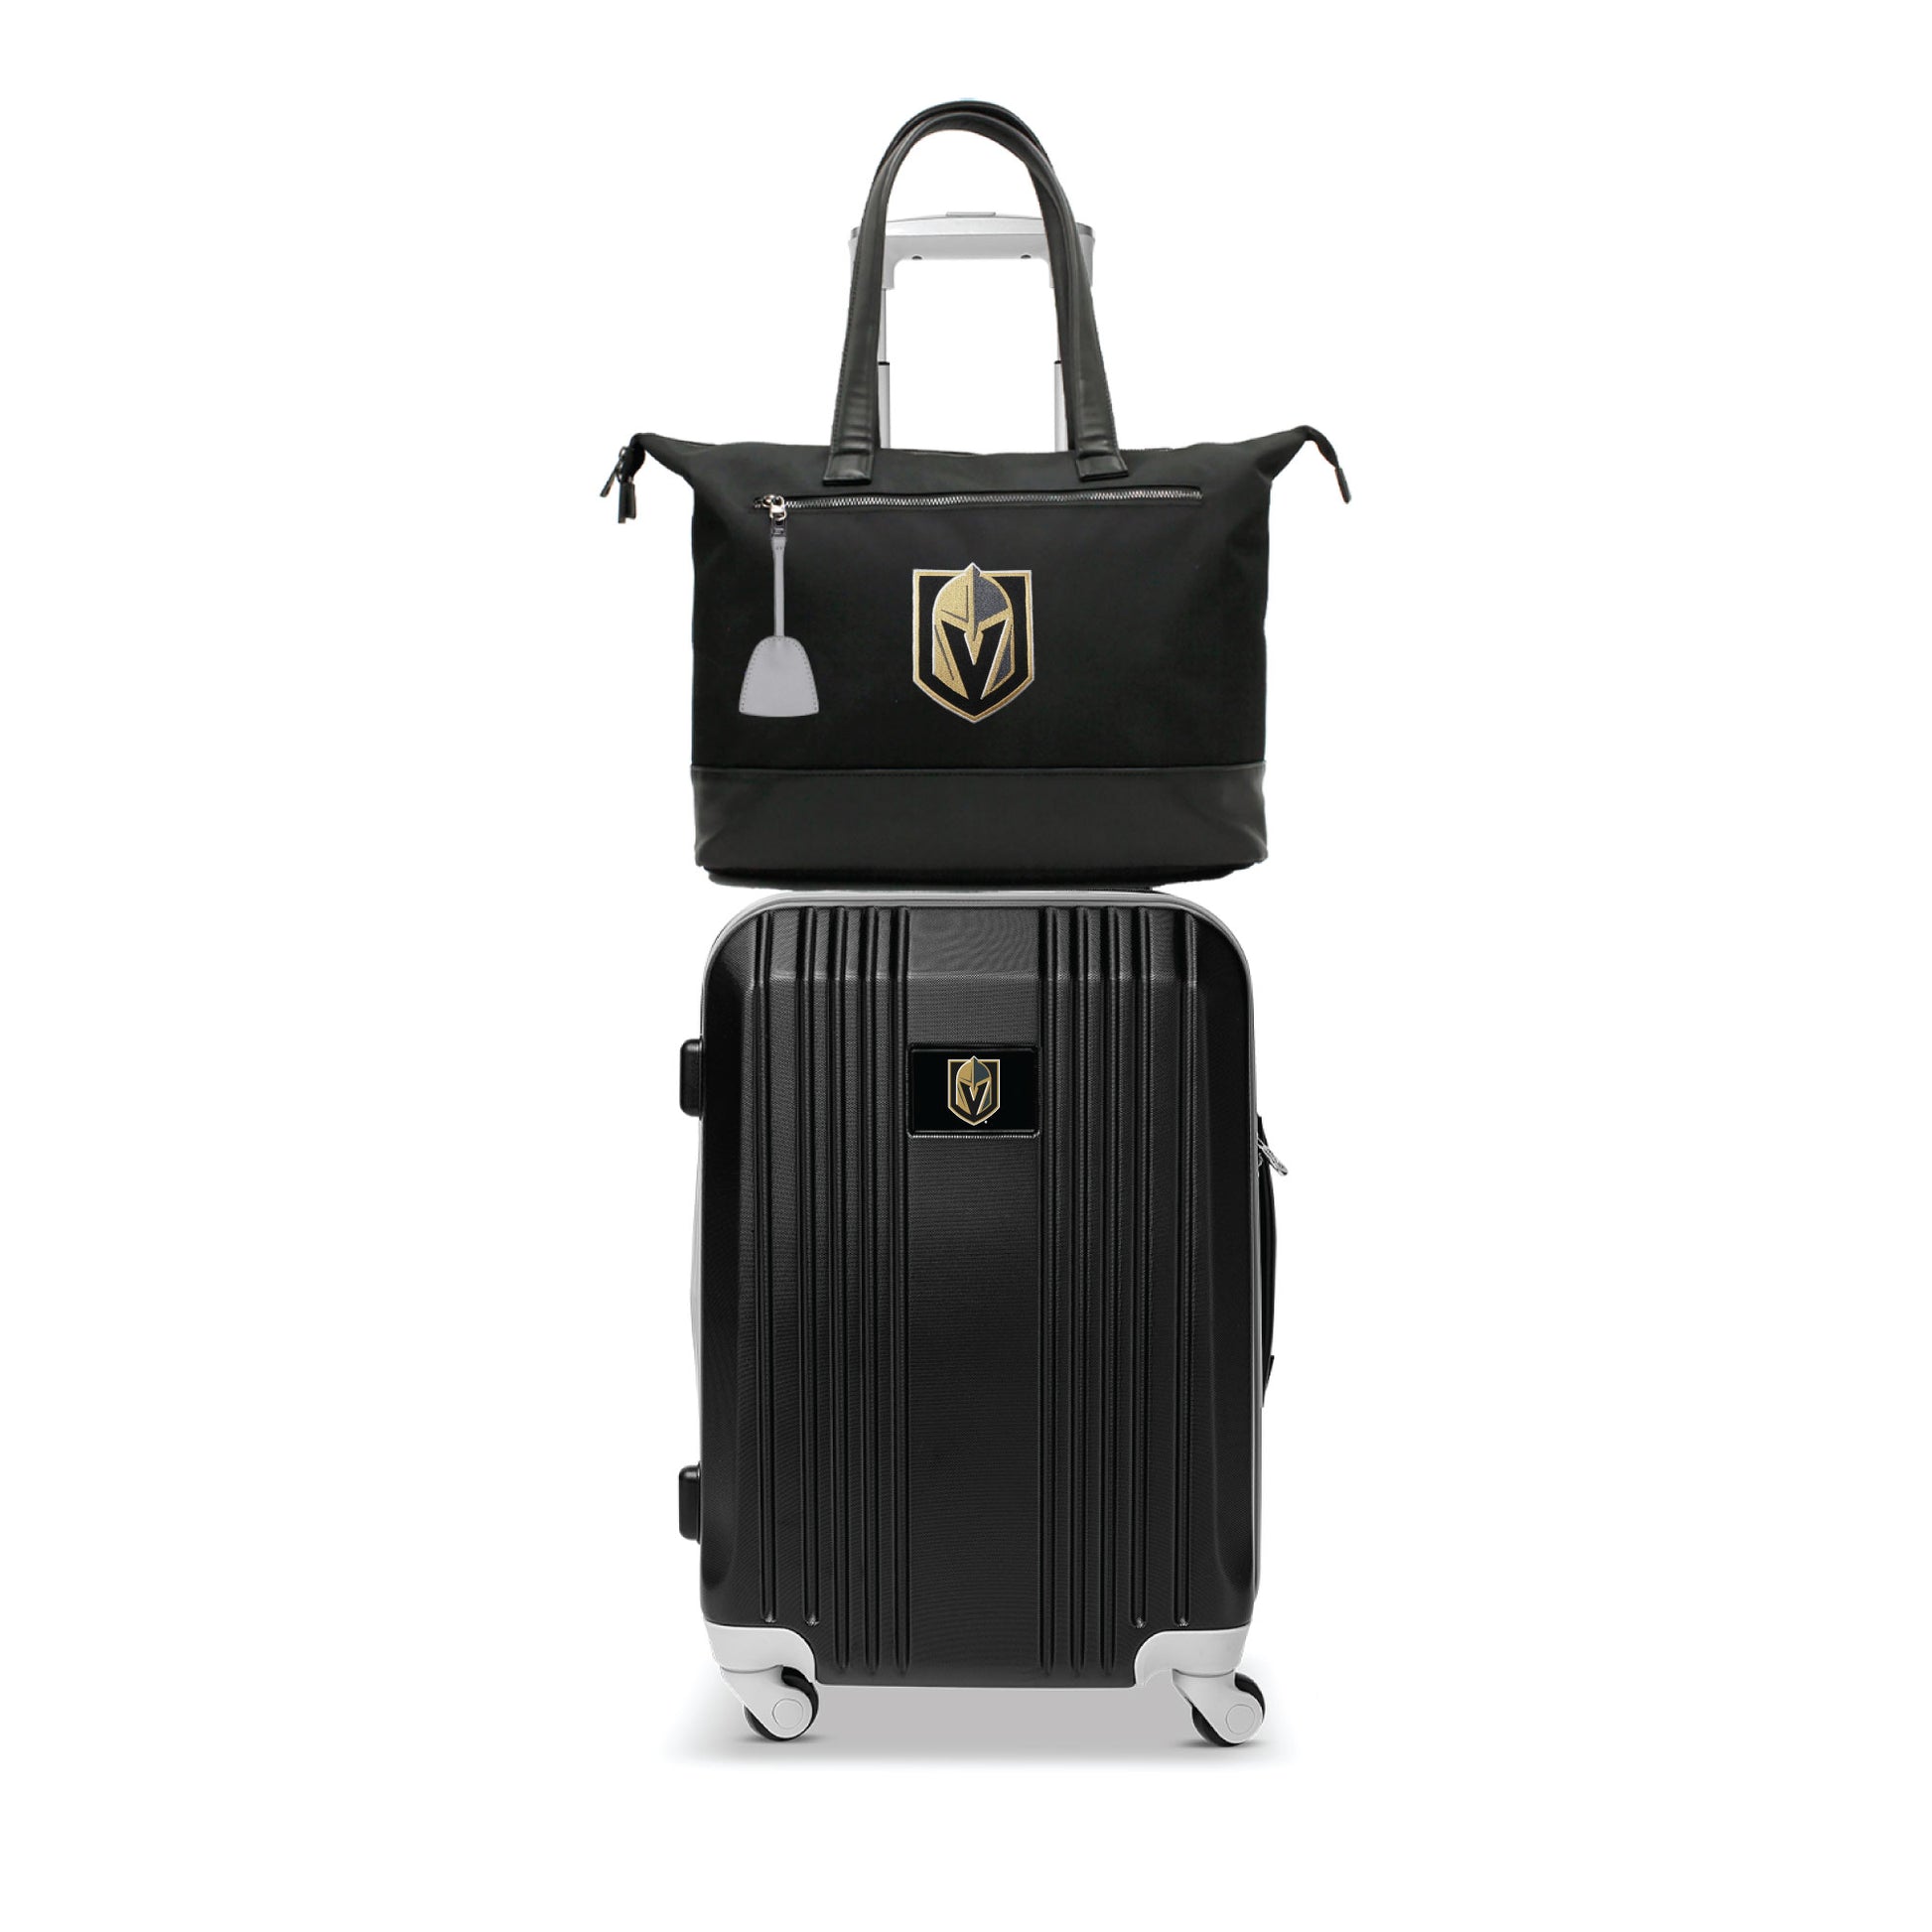 Vegas Golden Knights Premium Laptop Tote Bag and Luggage Set